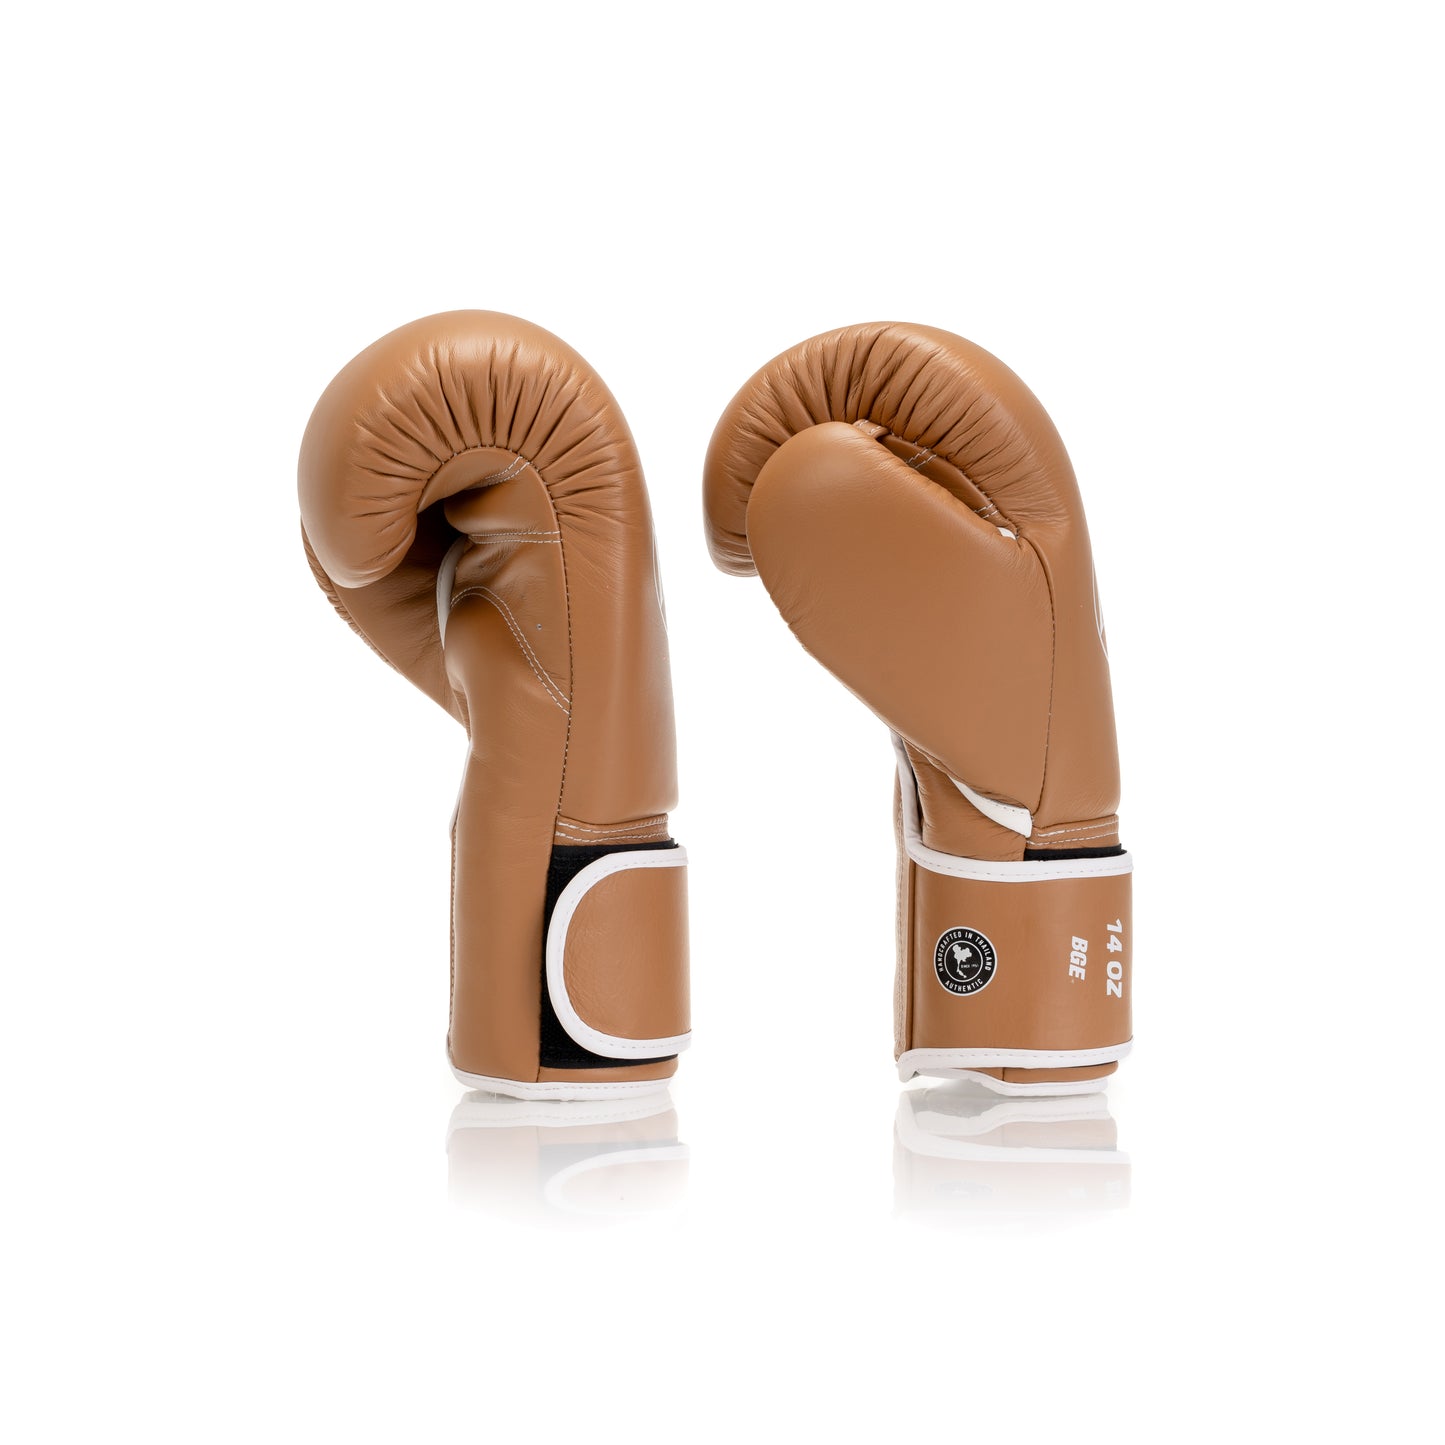 Elite Series Velcro Boxing Glove - Terra Cotta Brown - Windy Fight Gear B.V.